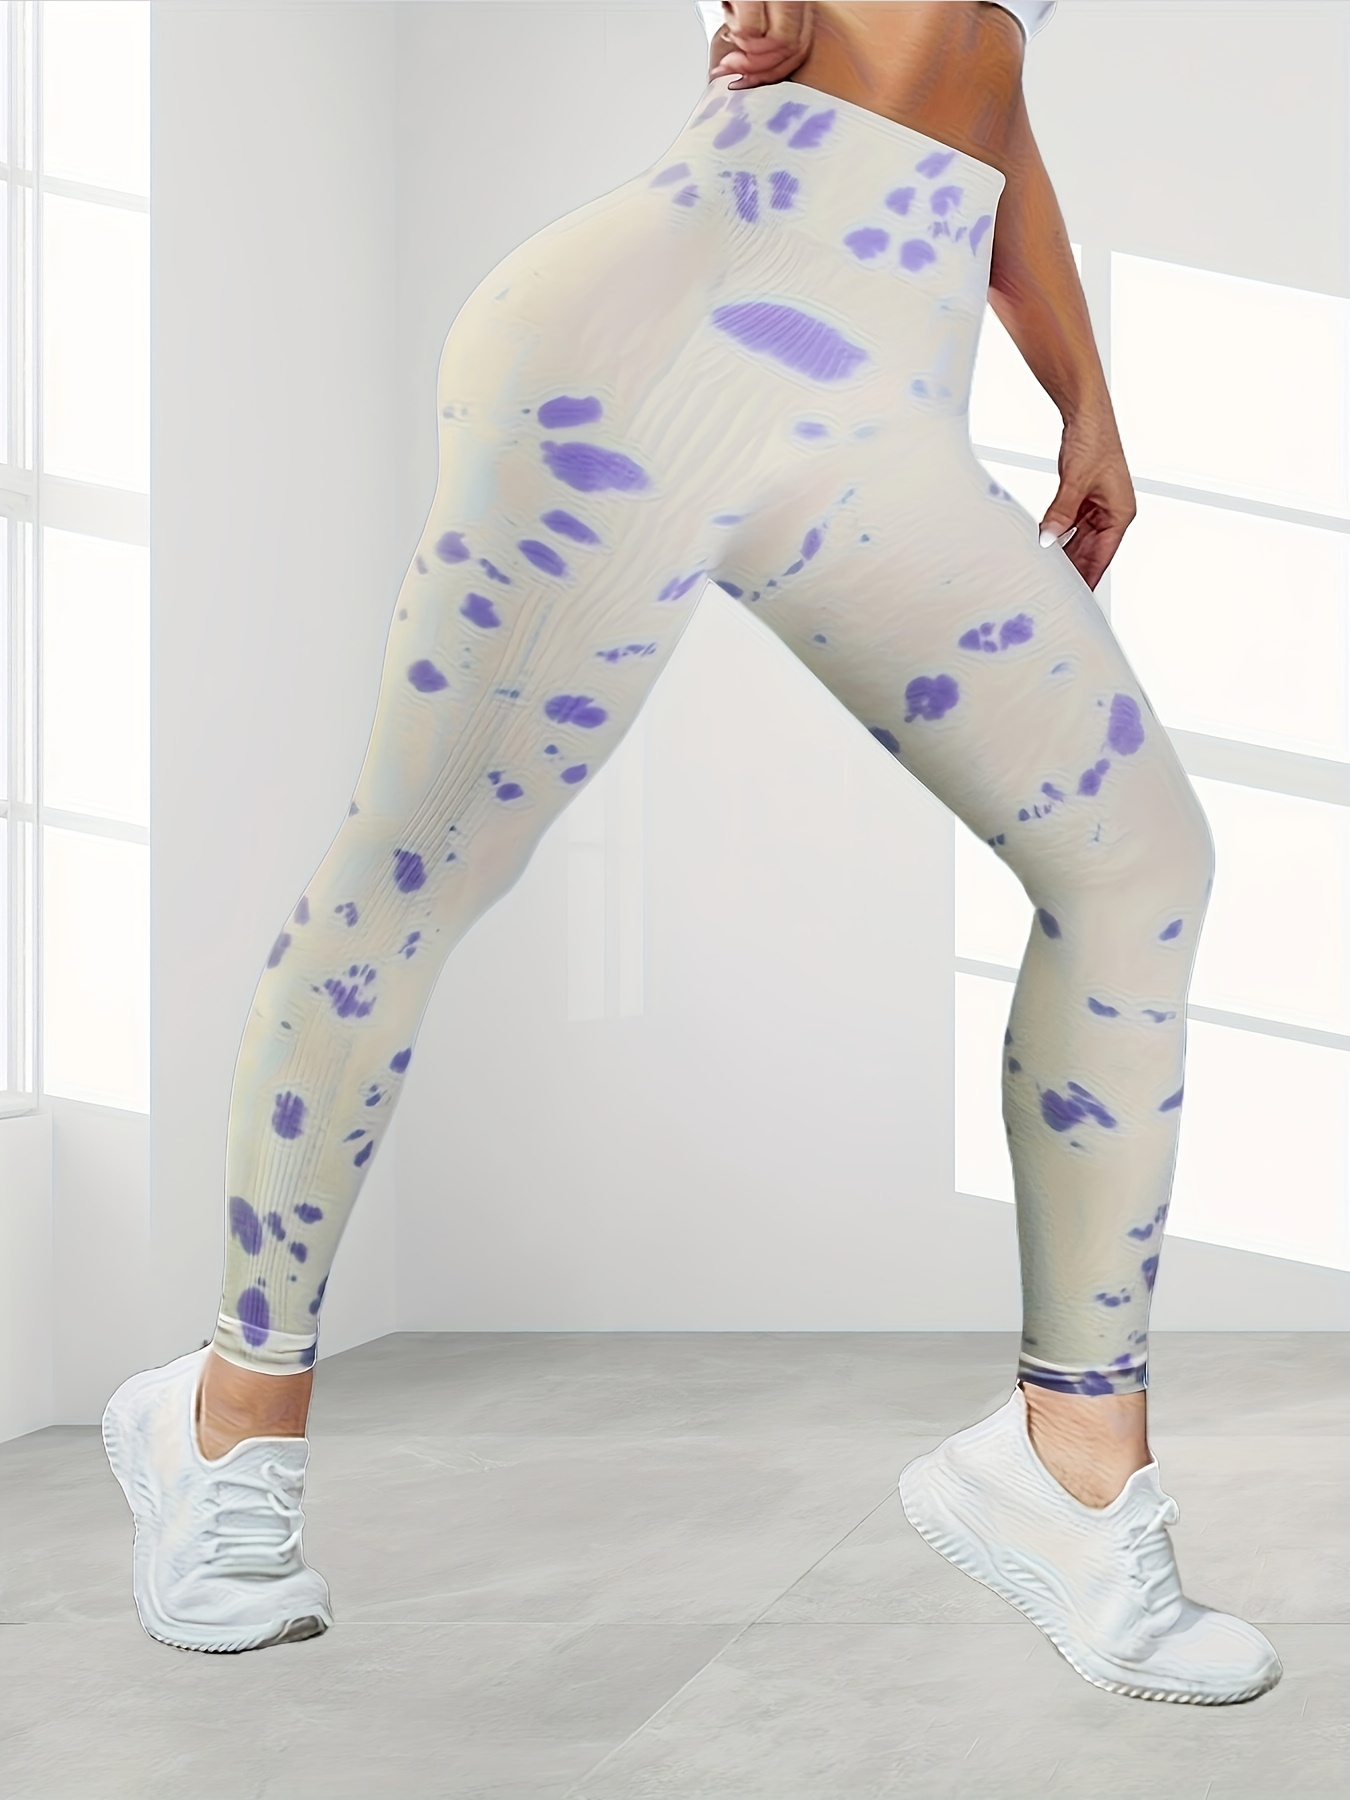 DPTALR Women's High Waist Running Tie-dye Pants Workout Leggings Yoga Pants  